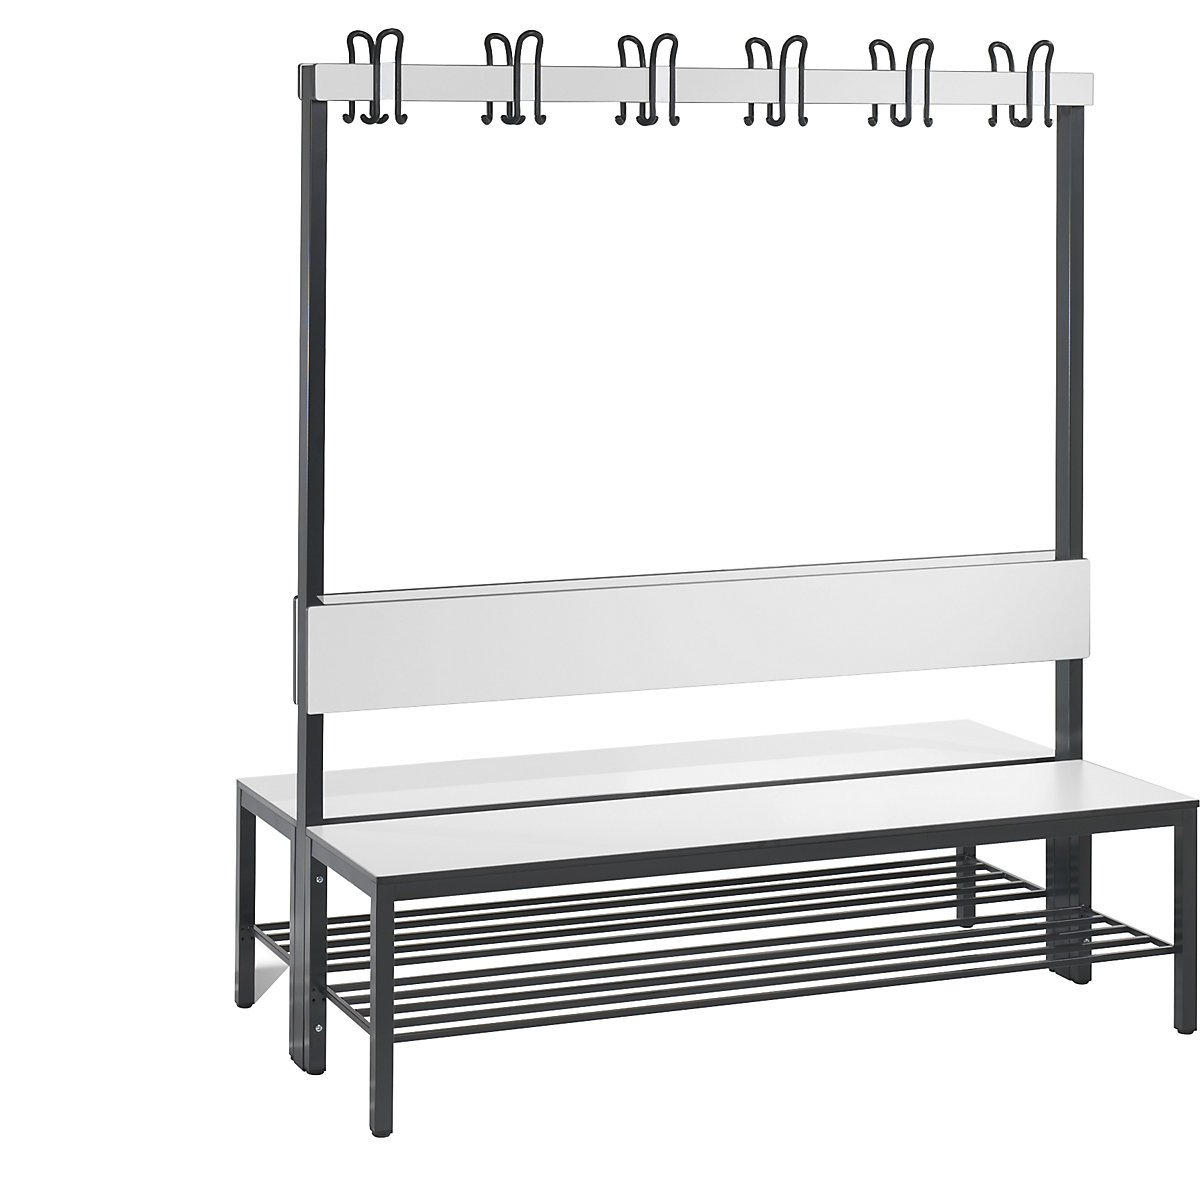 BASIC PLUS cloakroom bench, double sided – C+P, seat HPL, hook rail, shoe rack, length 1500 mm, white-7